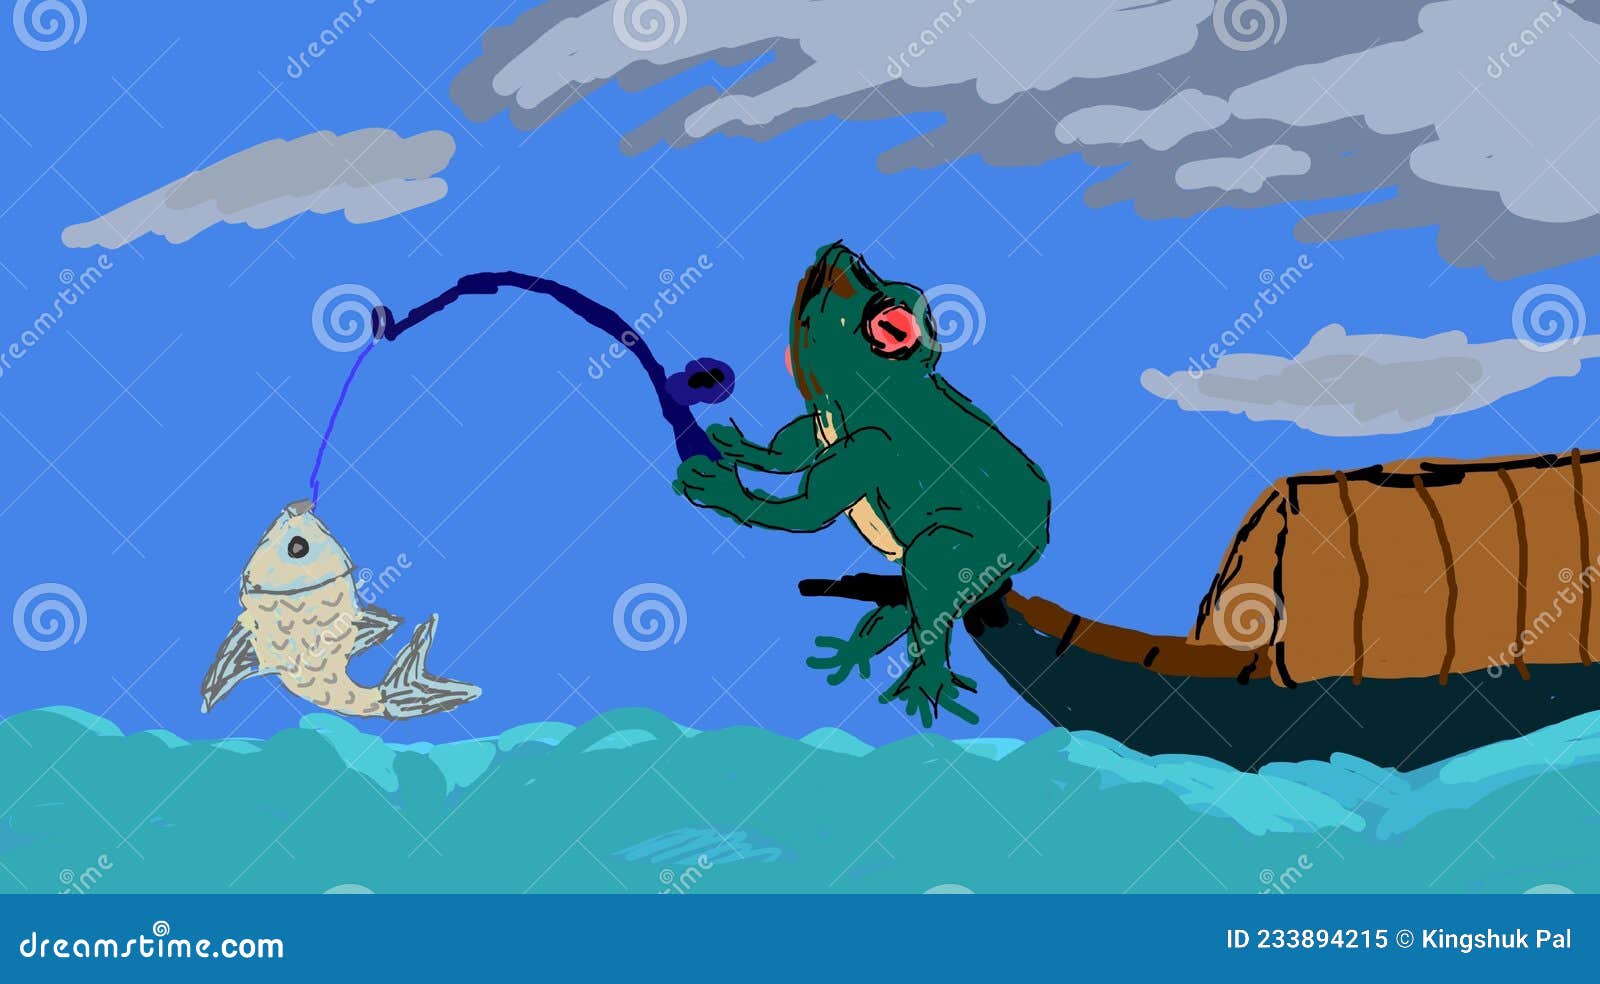 https://thumbs.dreamstime.com/z/hand-drawing-fantasy-photo-frog-fish-frog-fishing-boat-sea-hand-drawing-fantasy-photo-frog-fish-frog-233894215.jpg